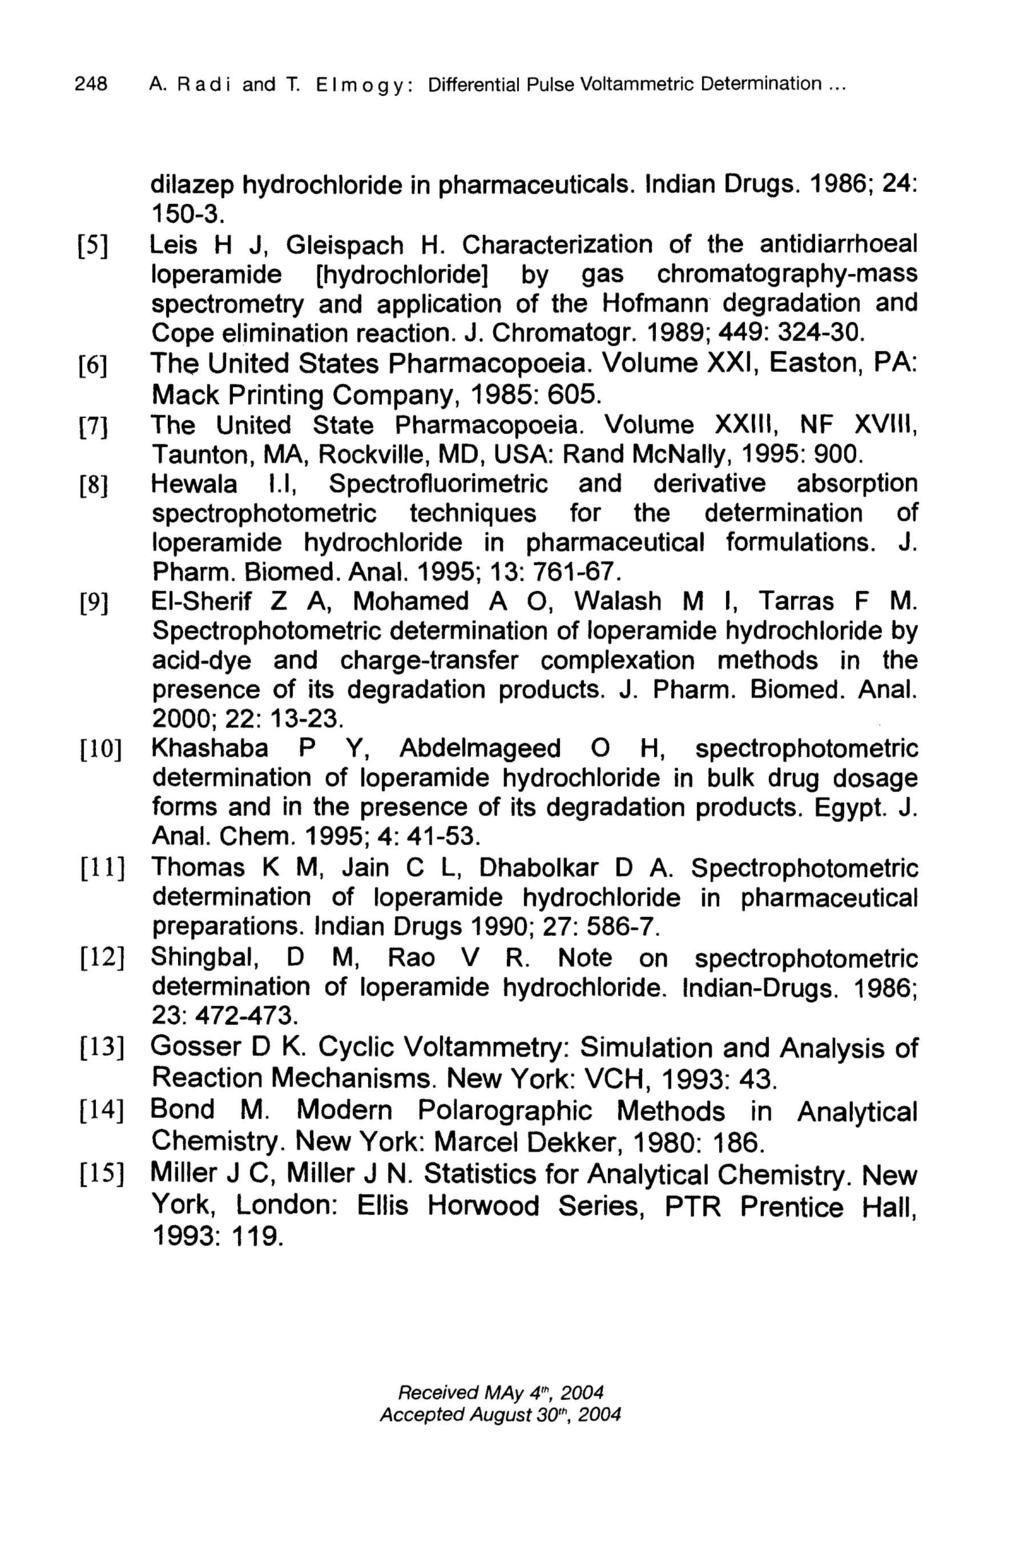 248 A. R a d i and T. E I m o g y : Differential Pulse Voltammetric Determination... dilazep hydrochloride in pharmaceuticals. Indian Drugs. 1986; 24: 1 50-3. Leis H J, Gleispach H.